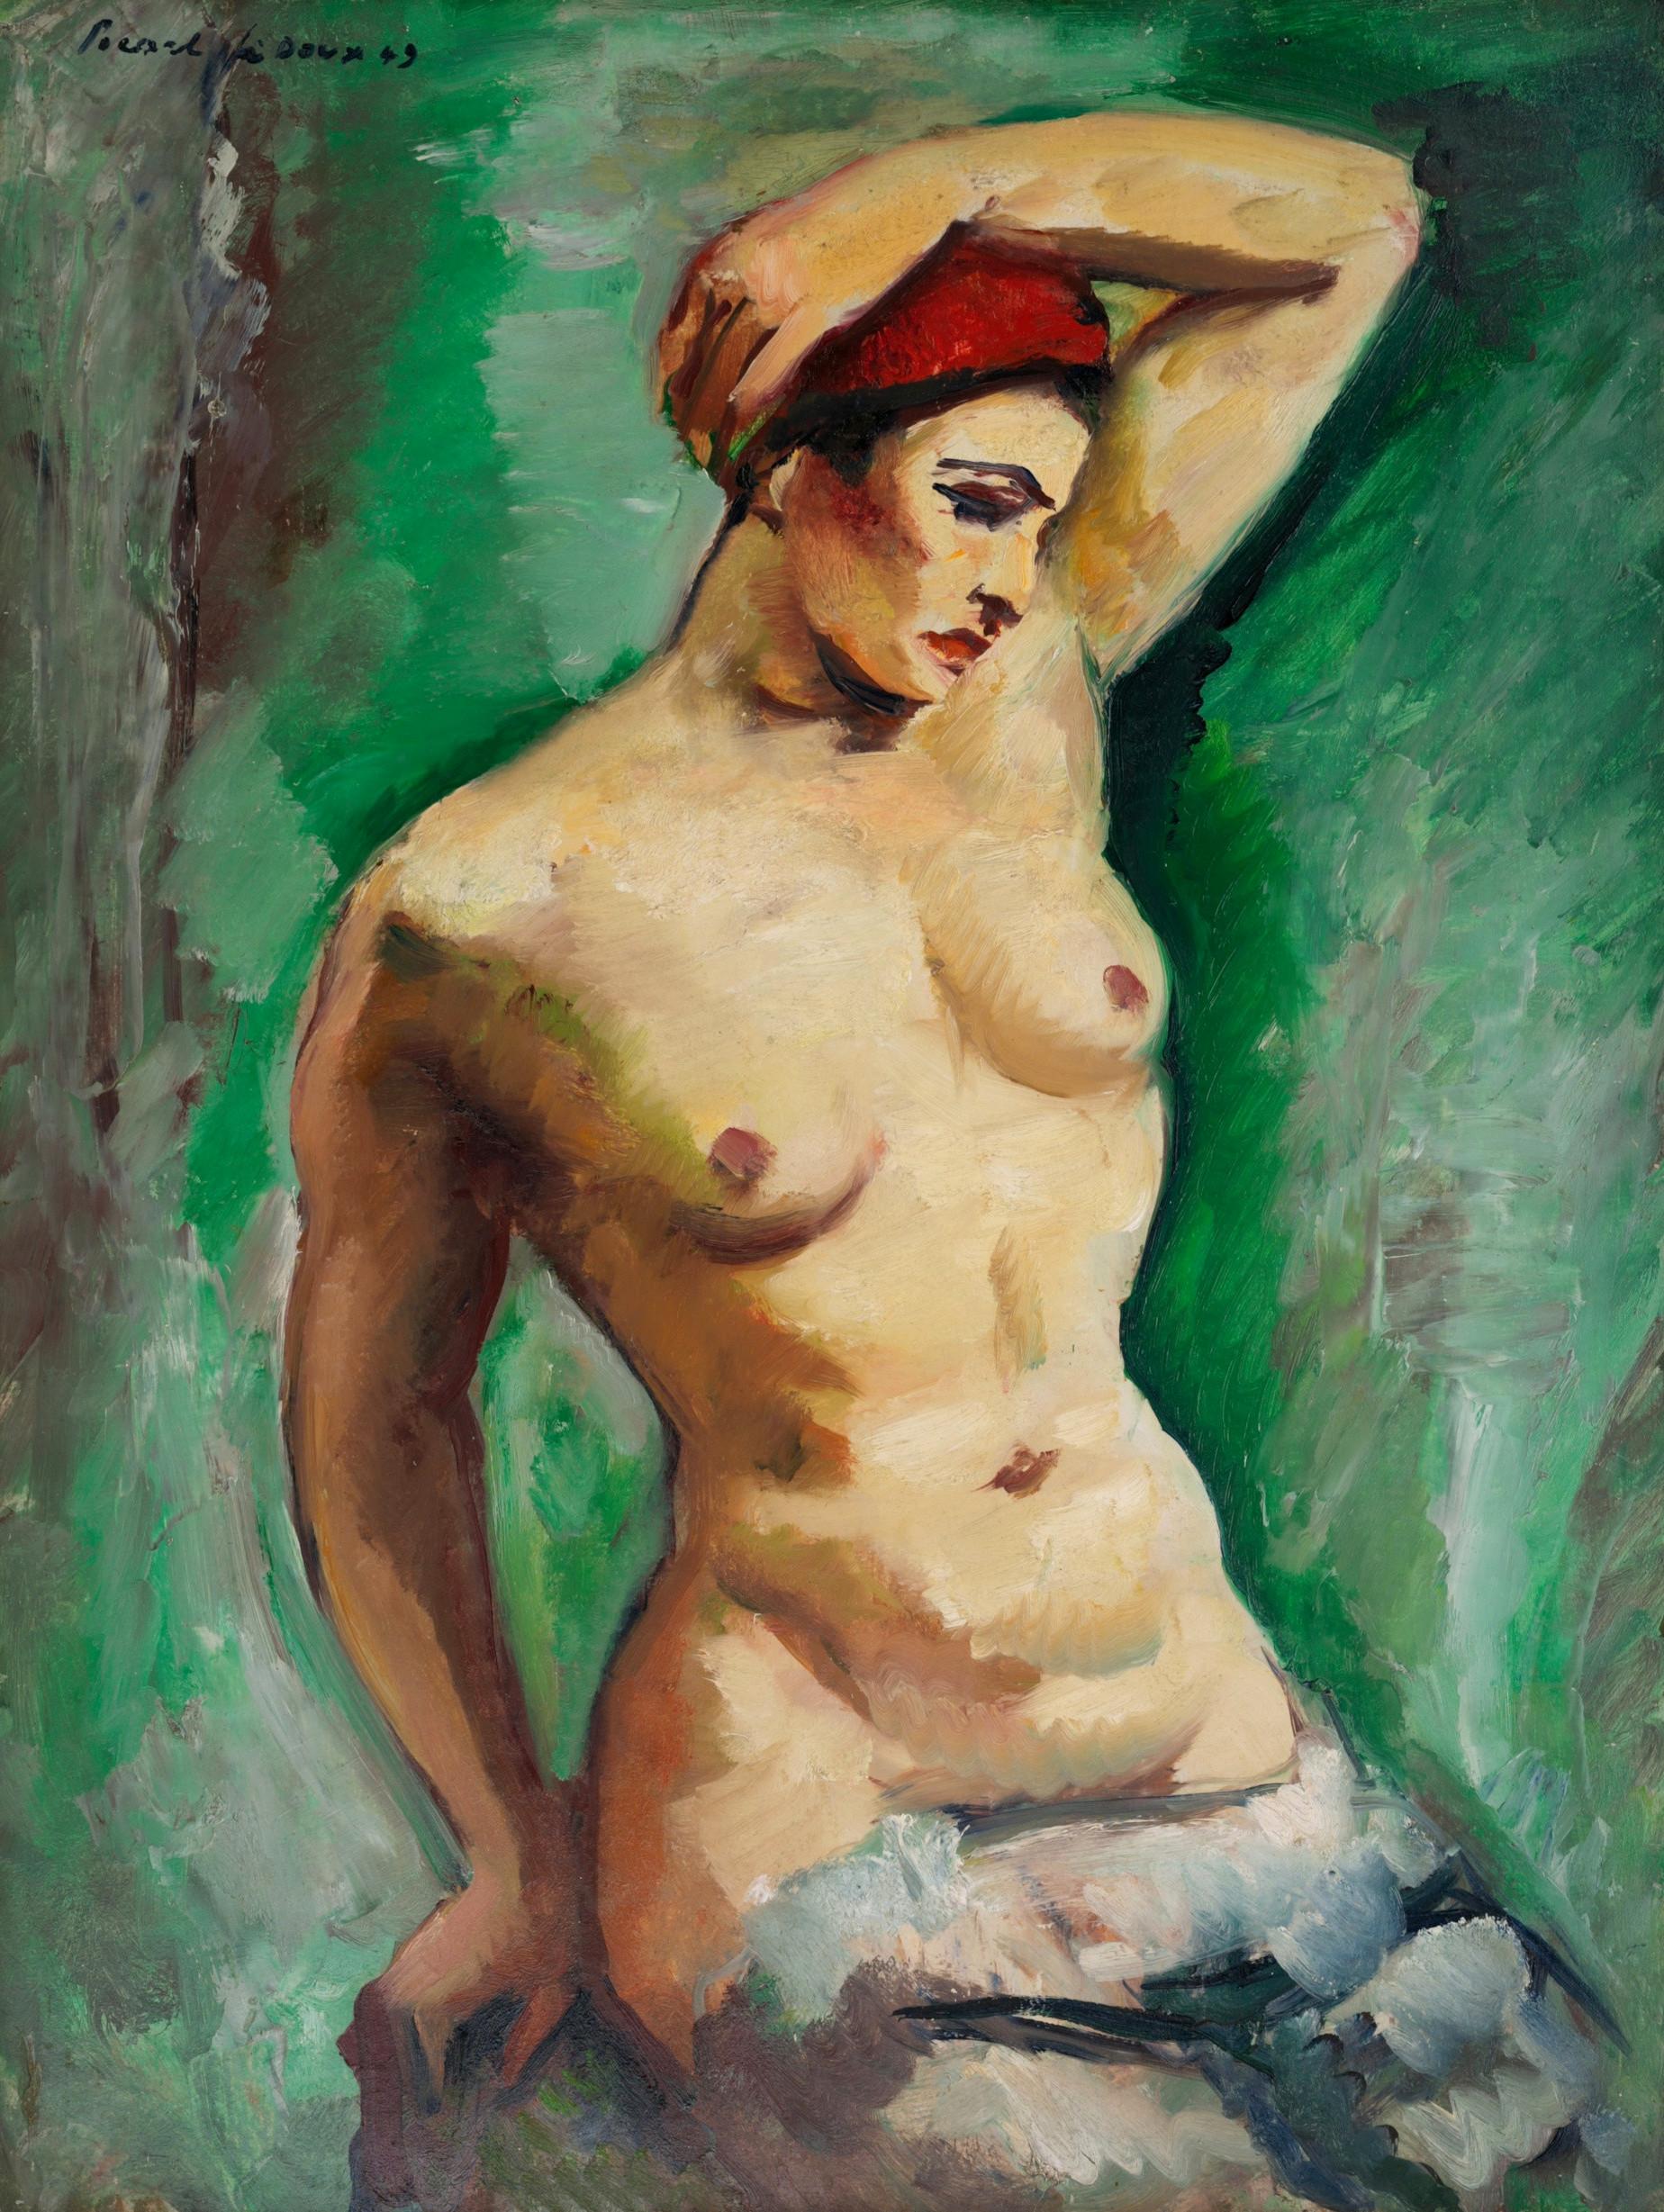 Charles PICART LE DOUX, Modell auf grünem Hintergrund, Öl auf Isorel, 1949 – Painting von Charles Picart le Doux